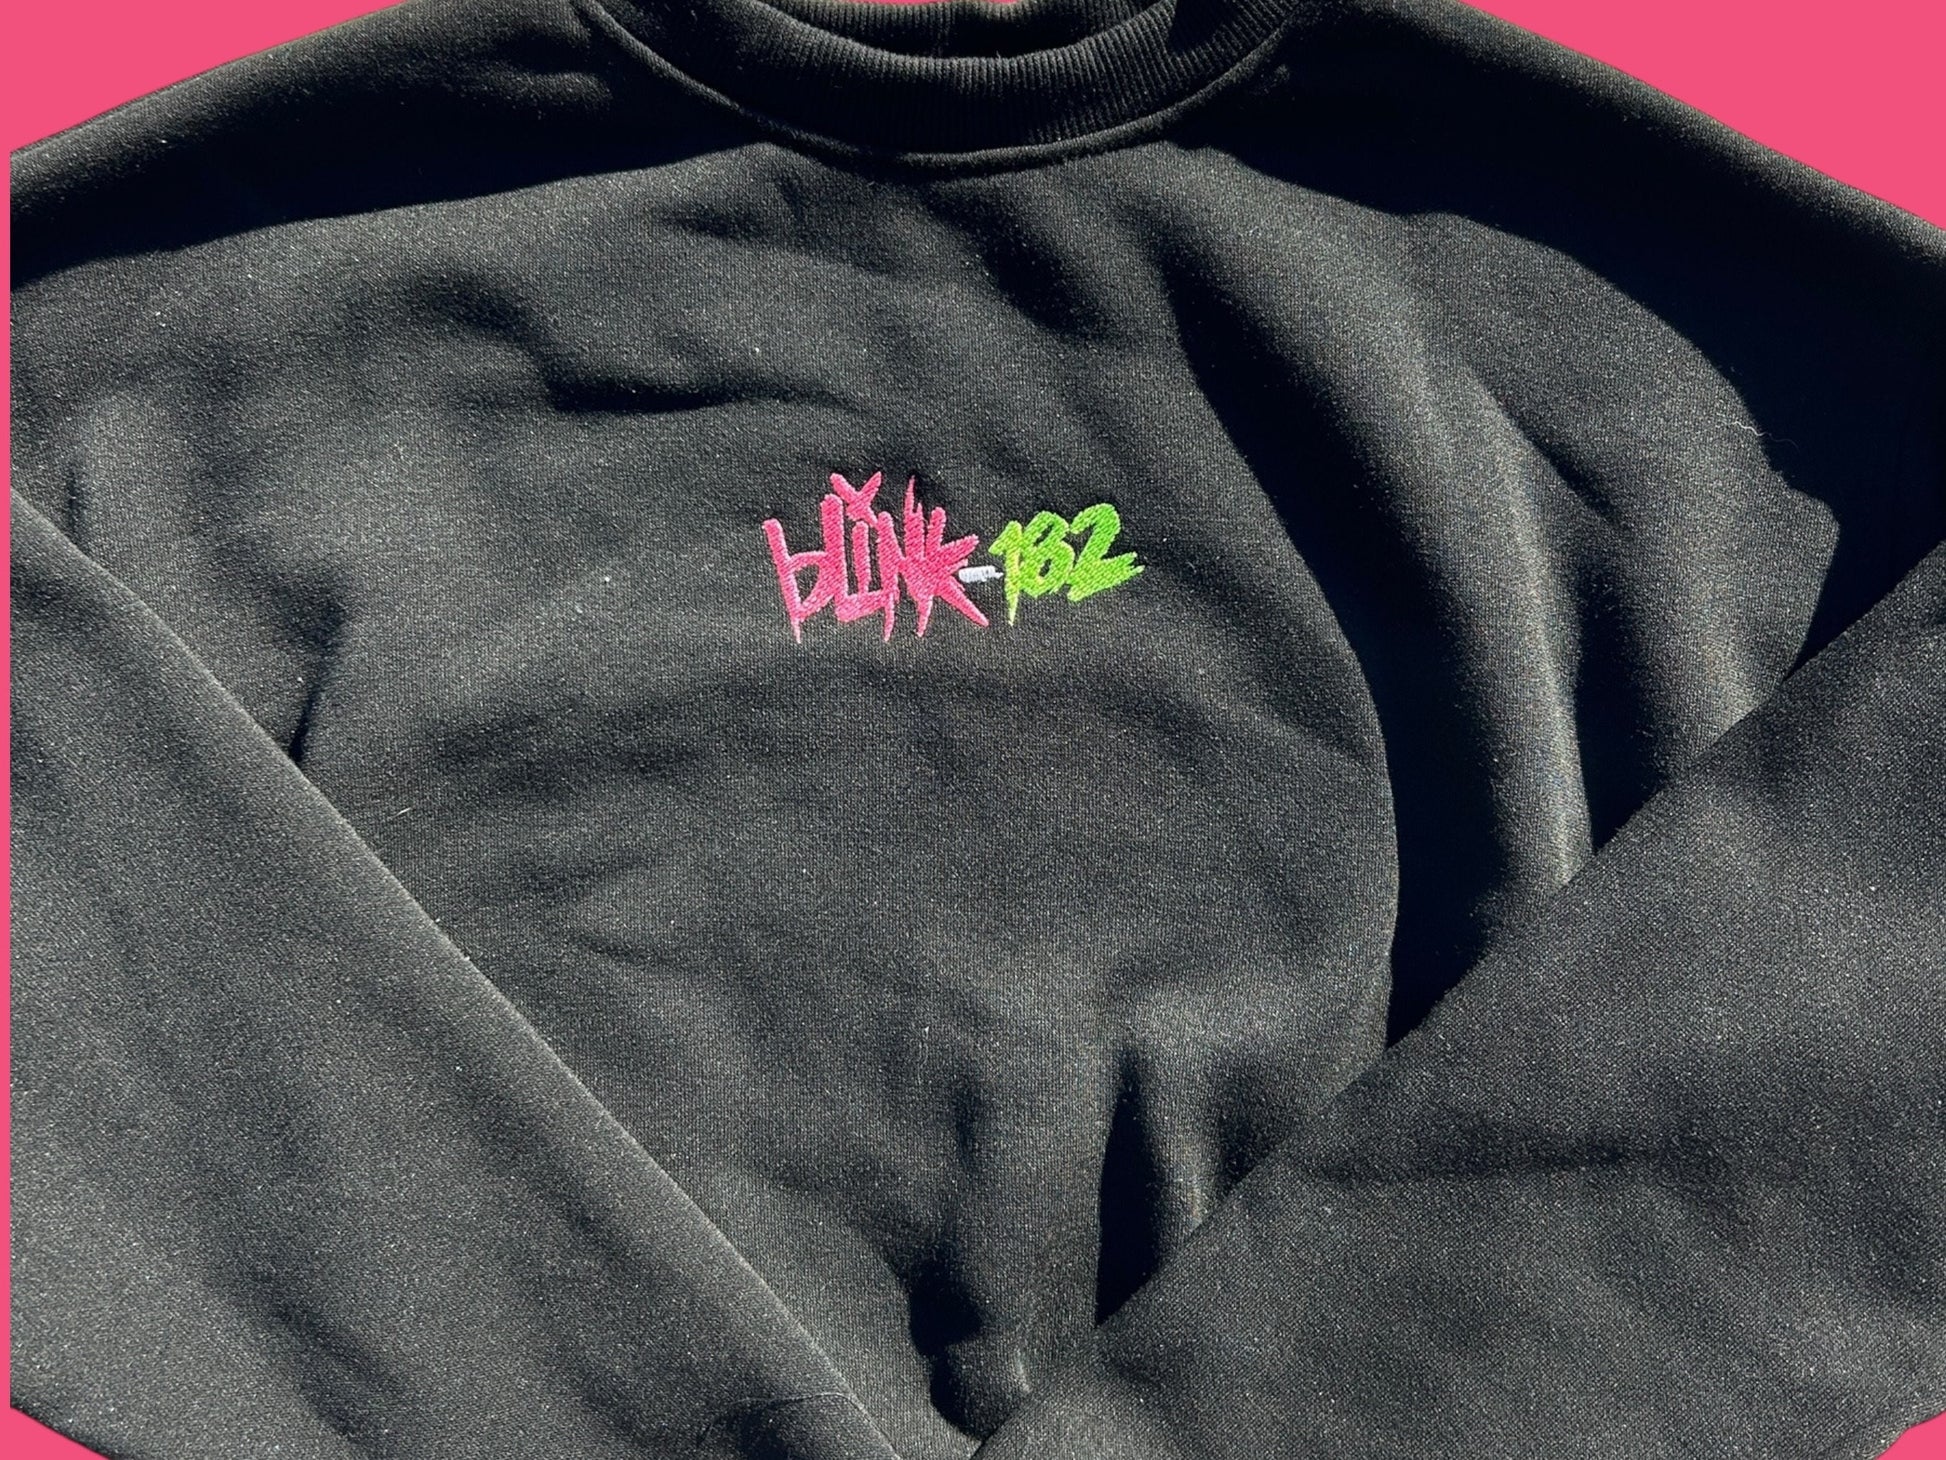 Blink 182 Sweatshirt - Arly